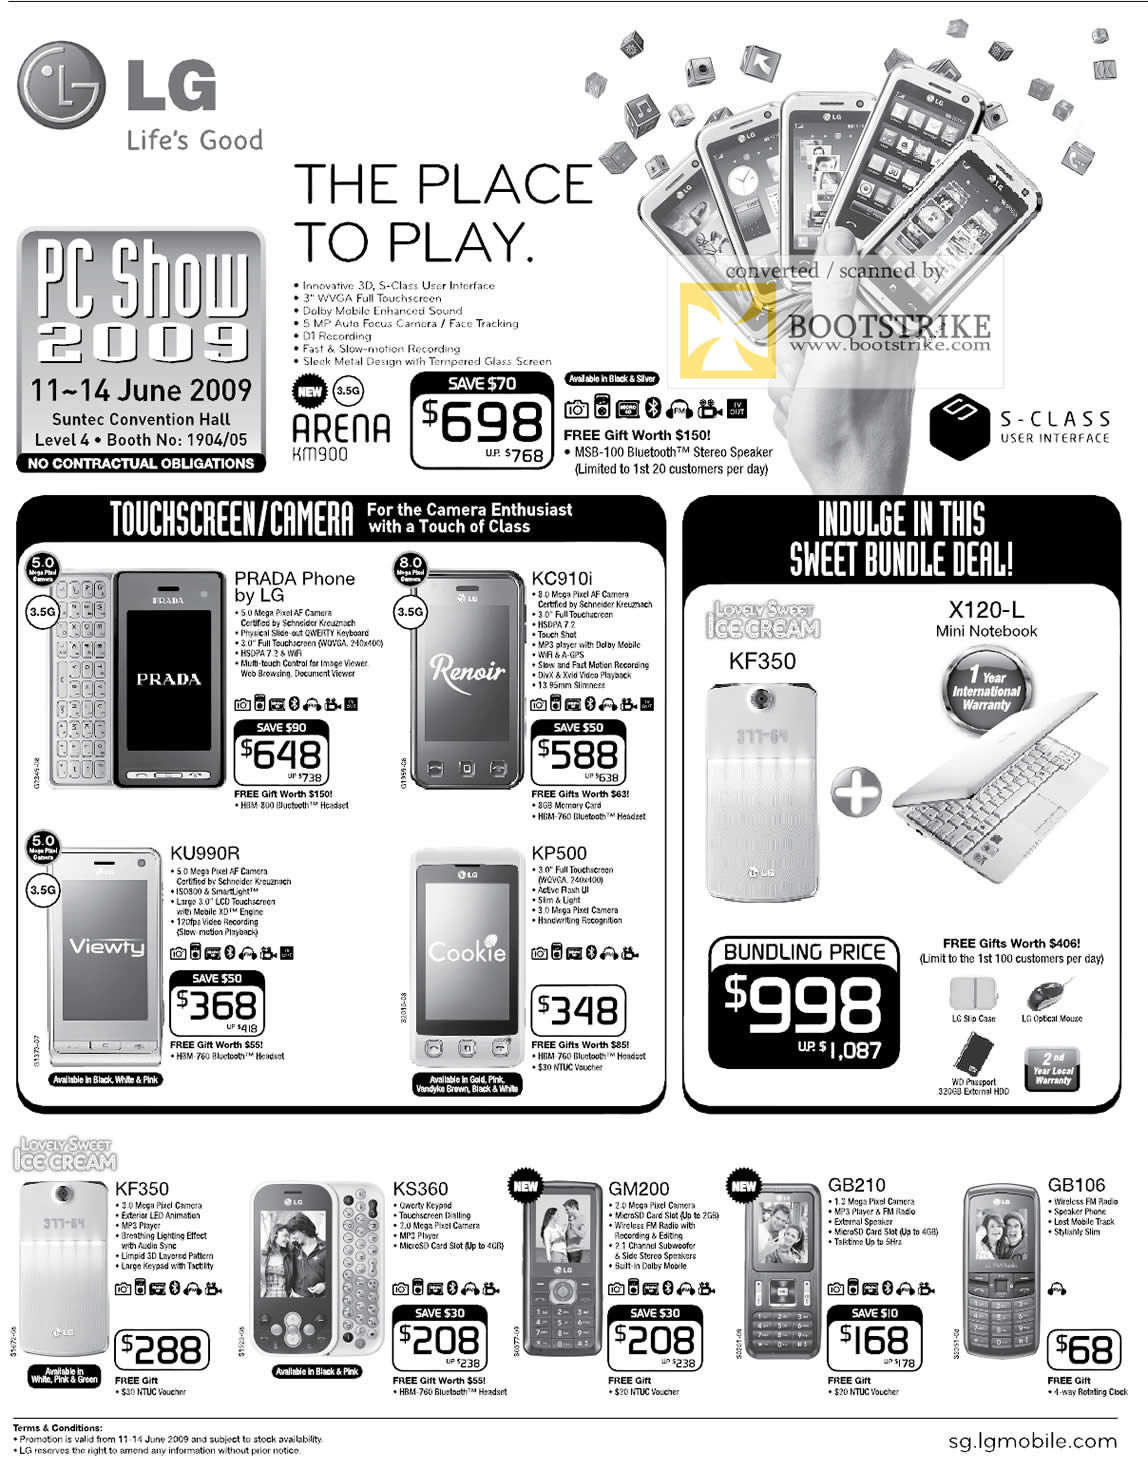 PC Show 2009 price list image brochure of LG Mobile Phones Prada KC910i KU990R KP500 KF350 Notebook X120-L